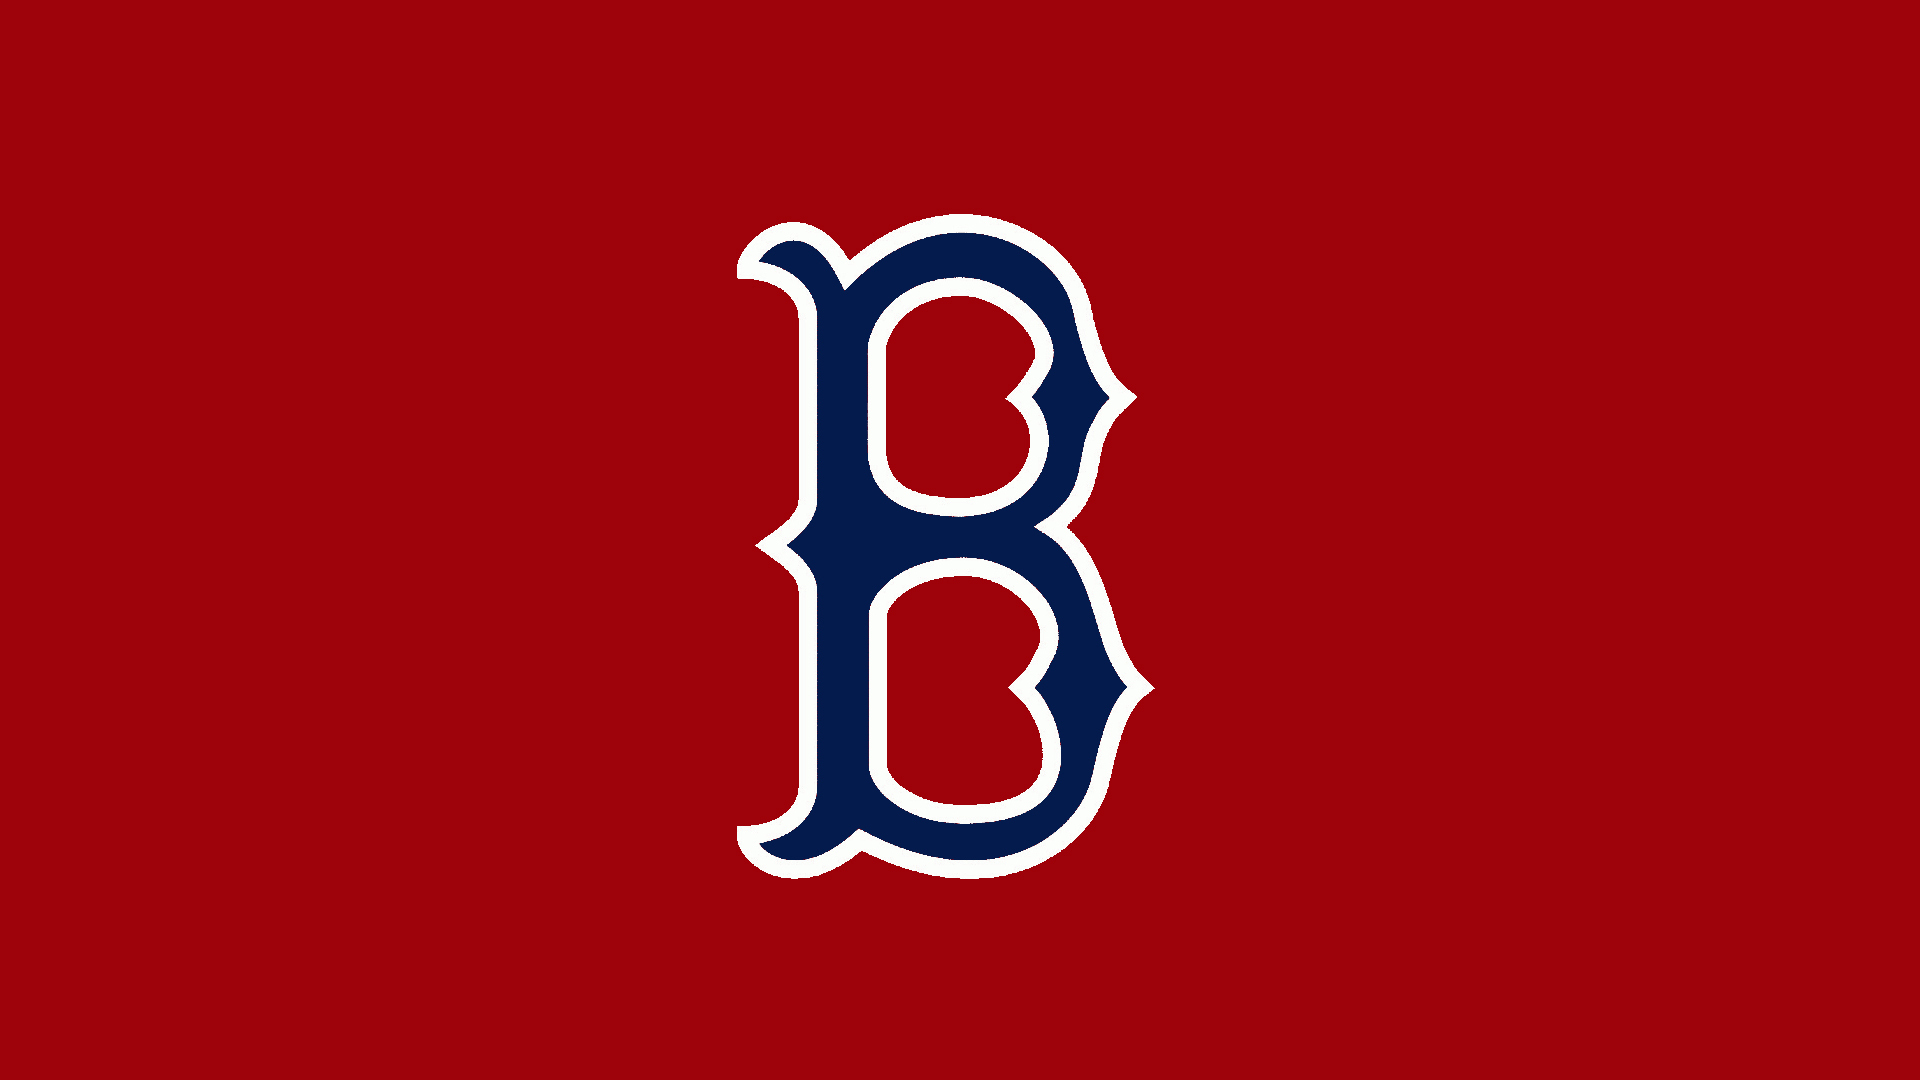 Boston Red Sox Logo Wallpaper | Free Download Clip Art | Free Clip